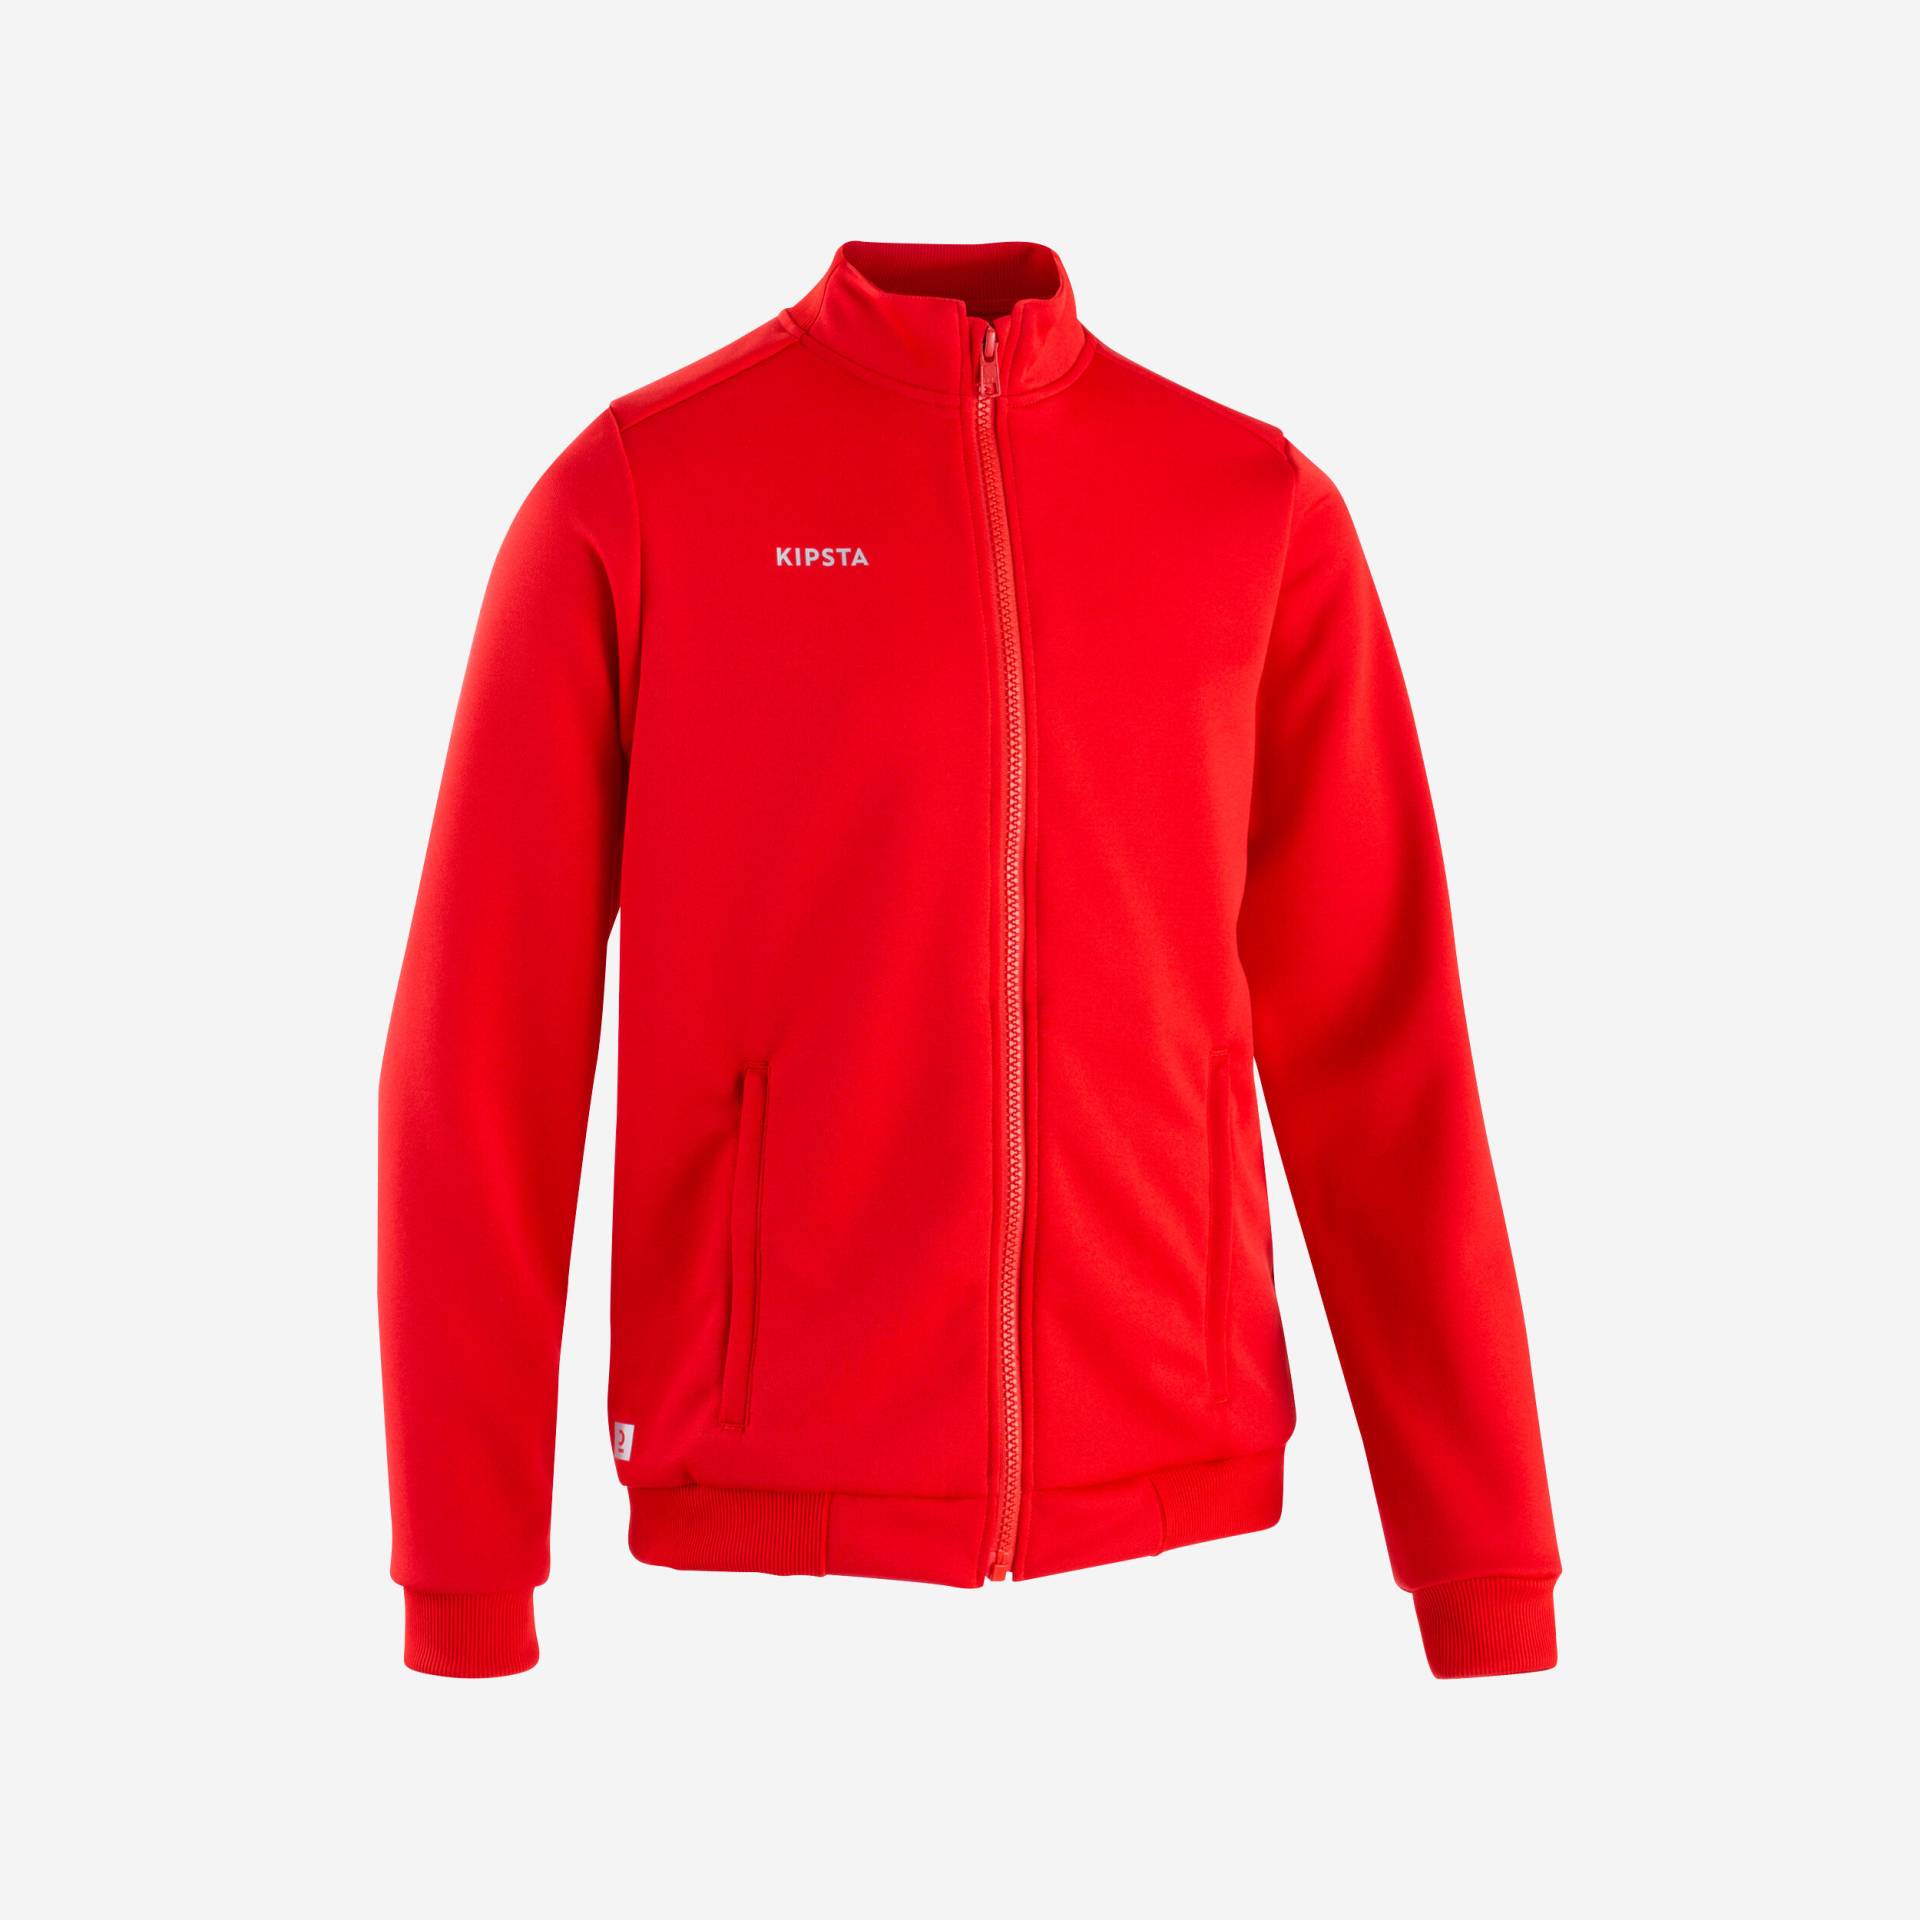 Damen/Herren Fussball Trainingsjacke - Essential rot von KIPSTA